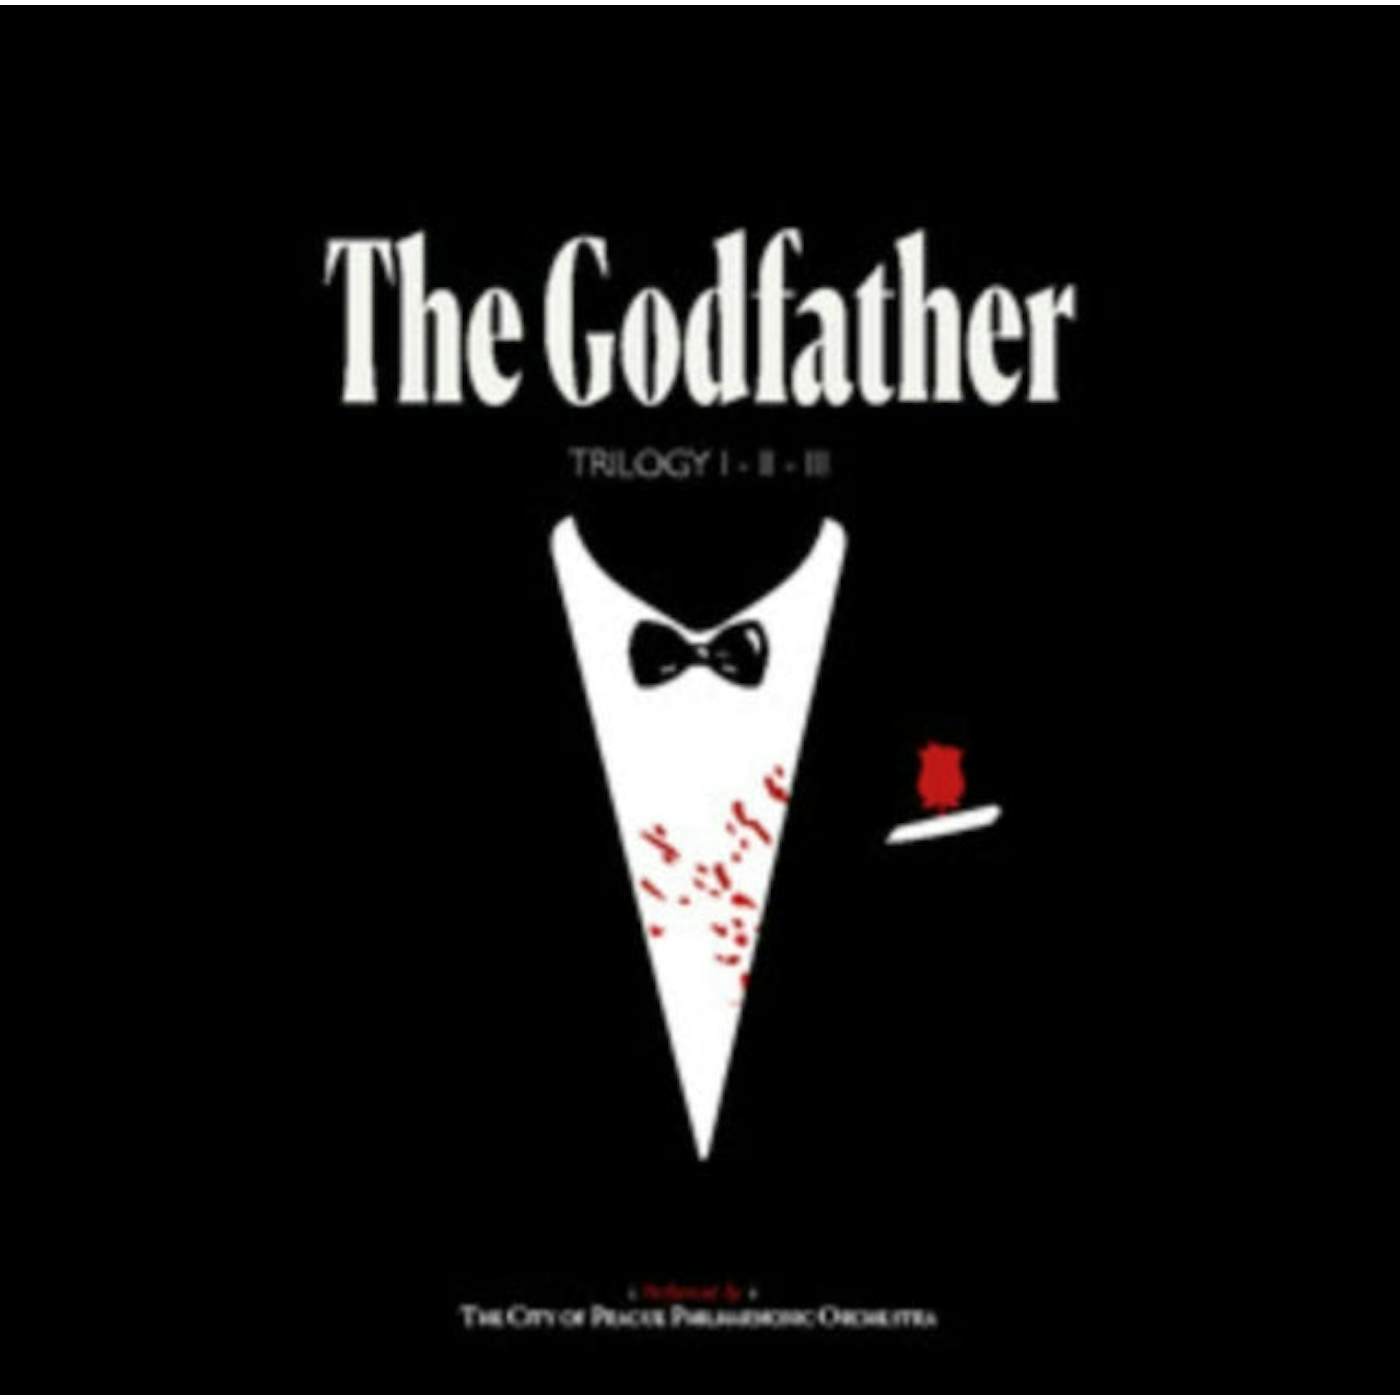 The City of Prague Philharmonic Orchestra LP Vinyl Record - The Godfather Trilogy (Red/White Splatter Vinyl)